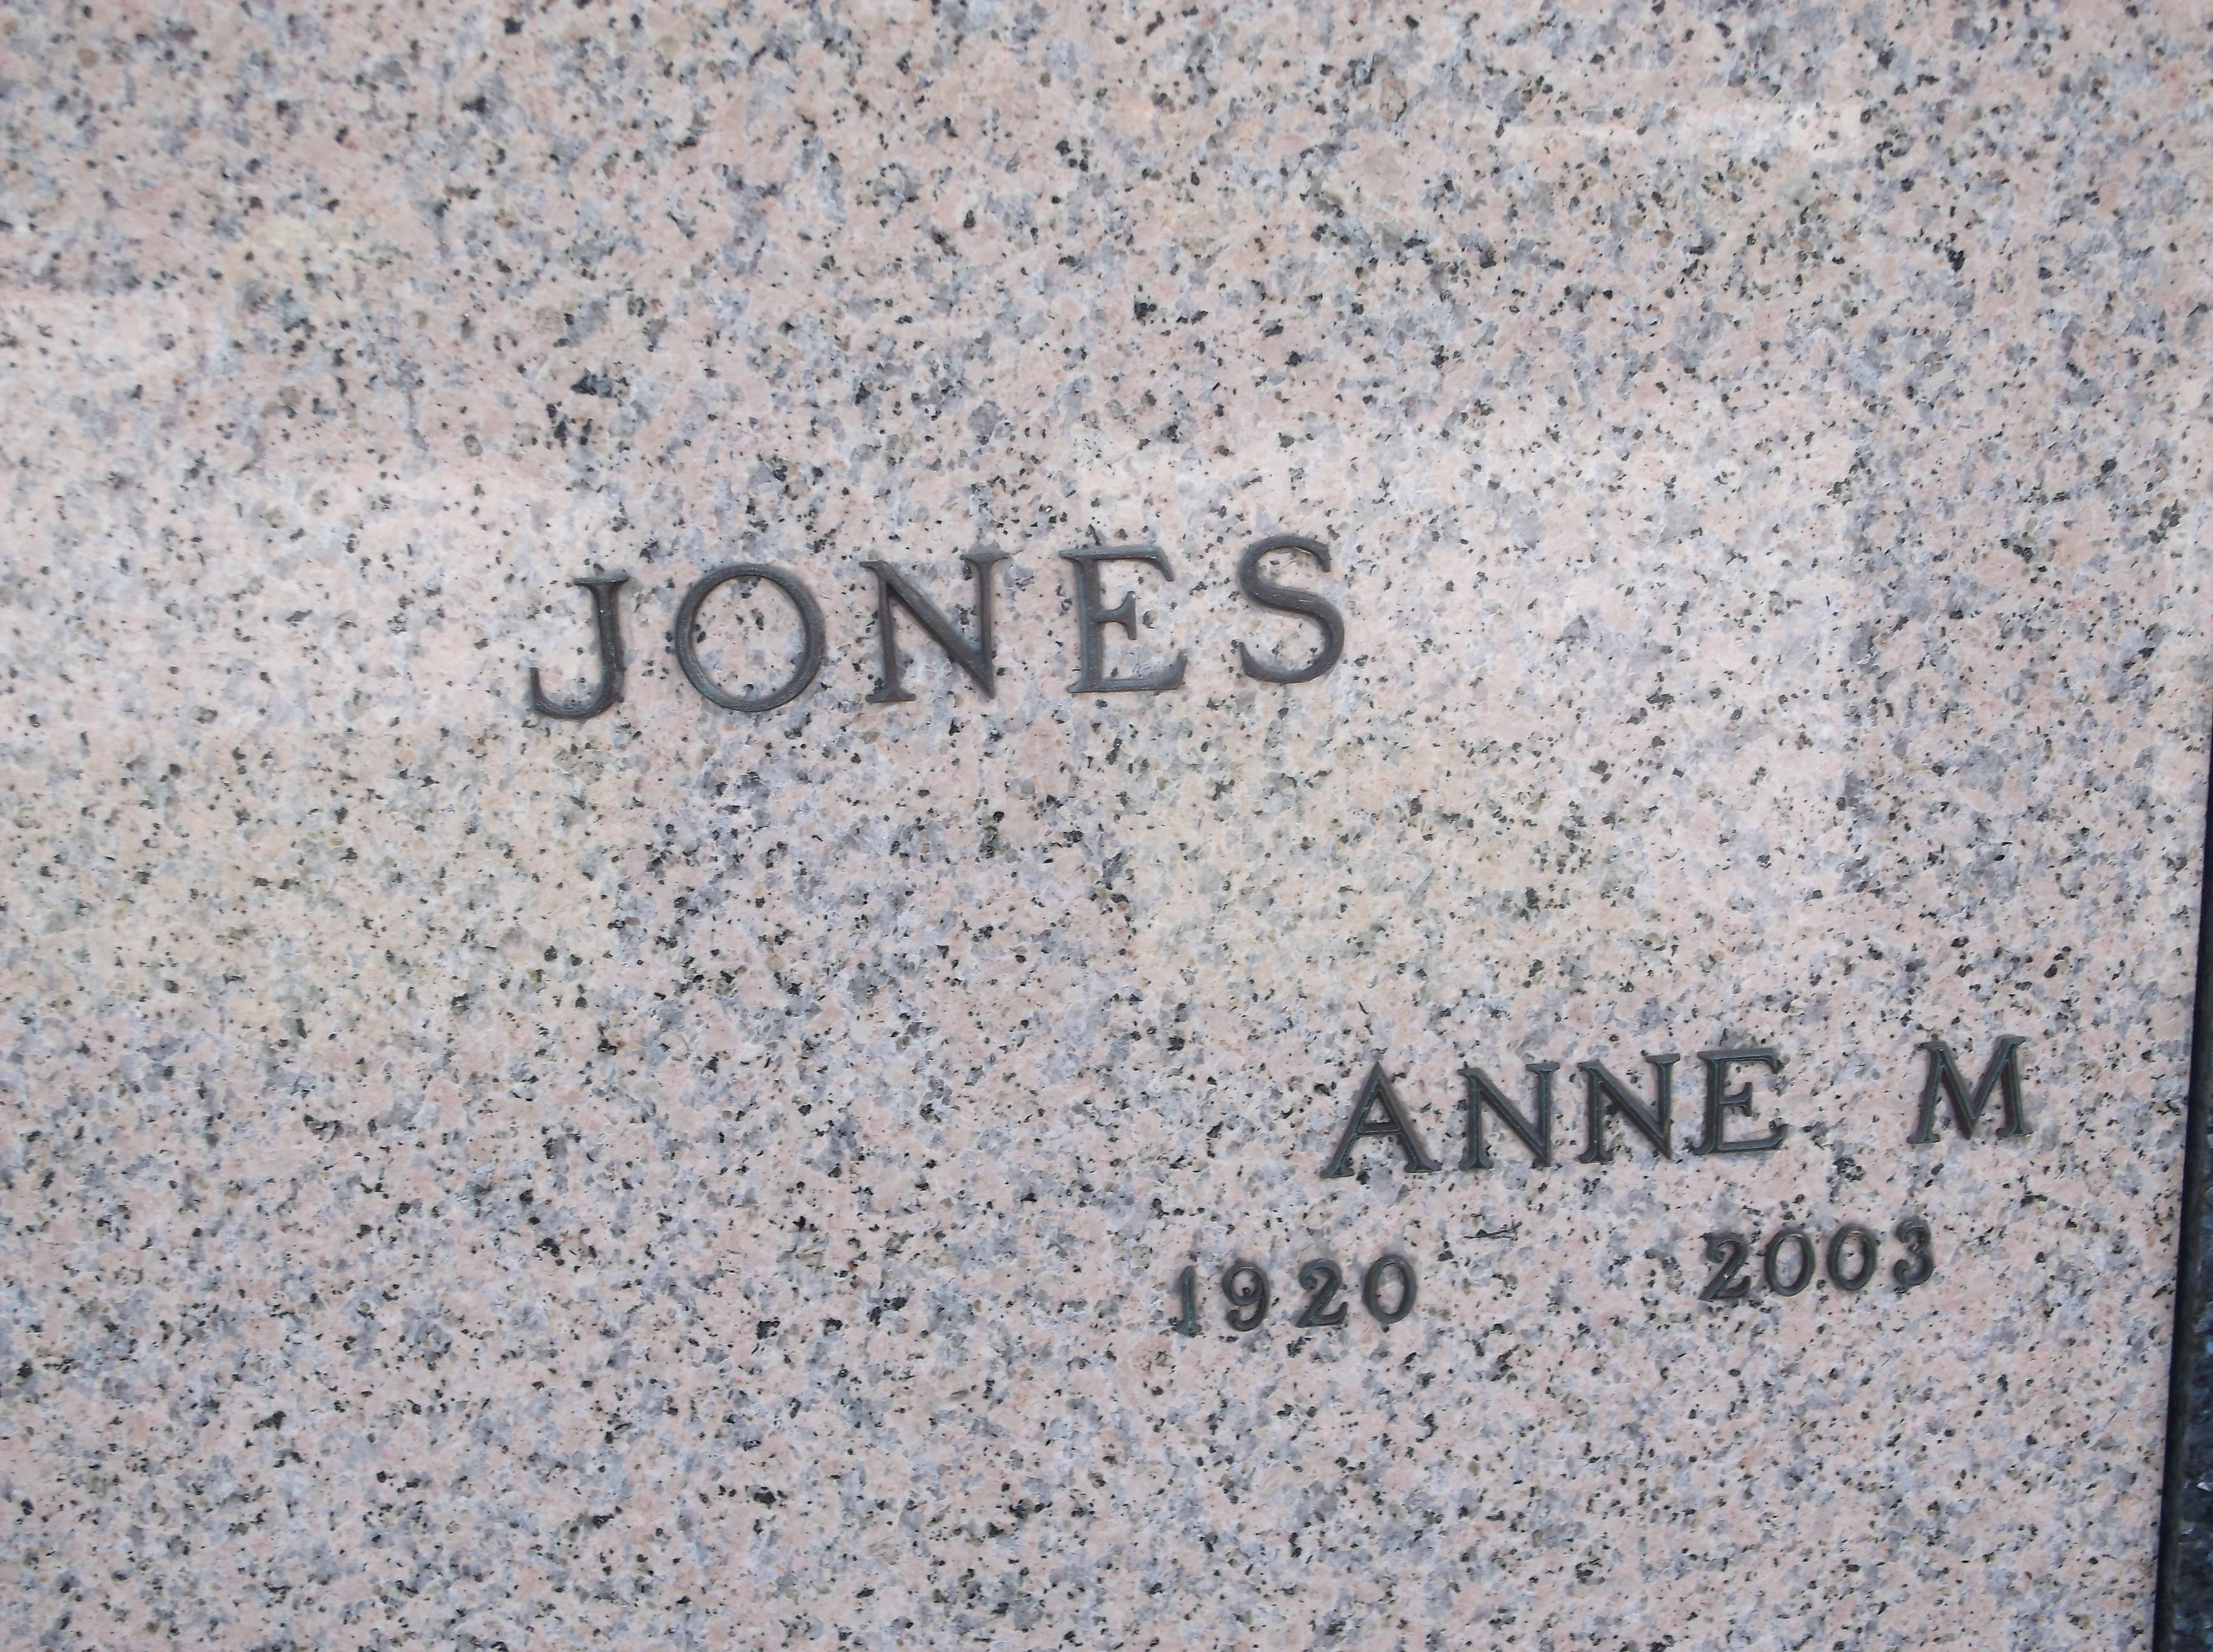 Anne M Jones